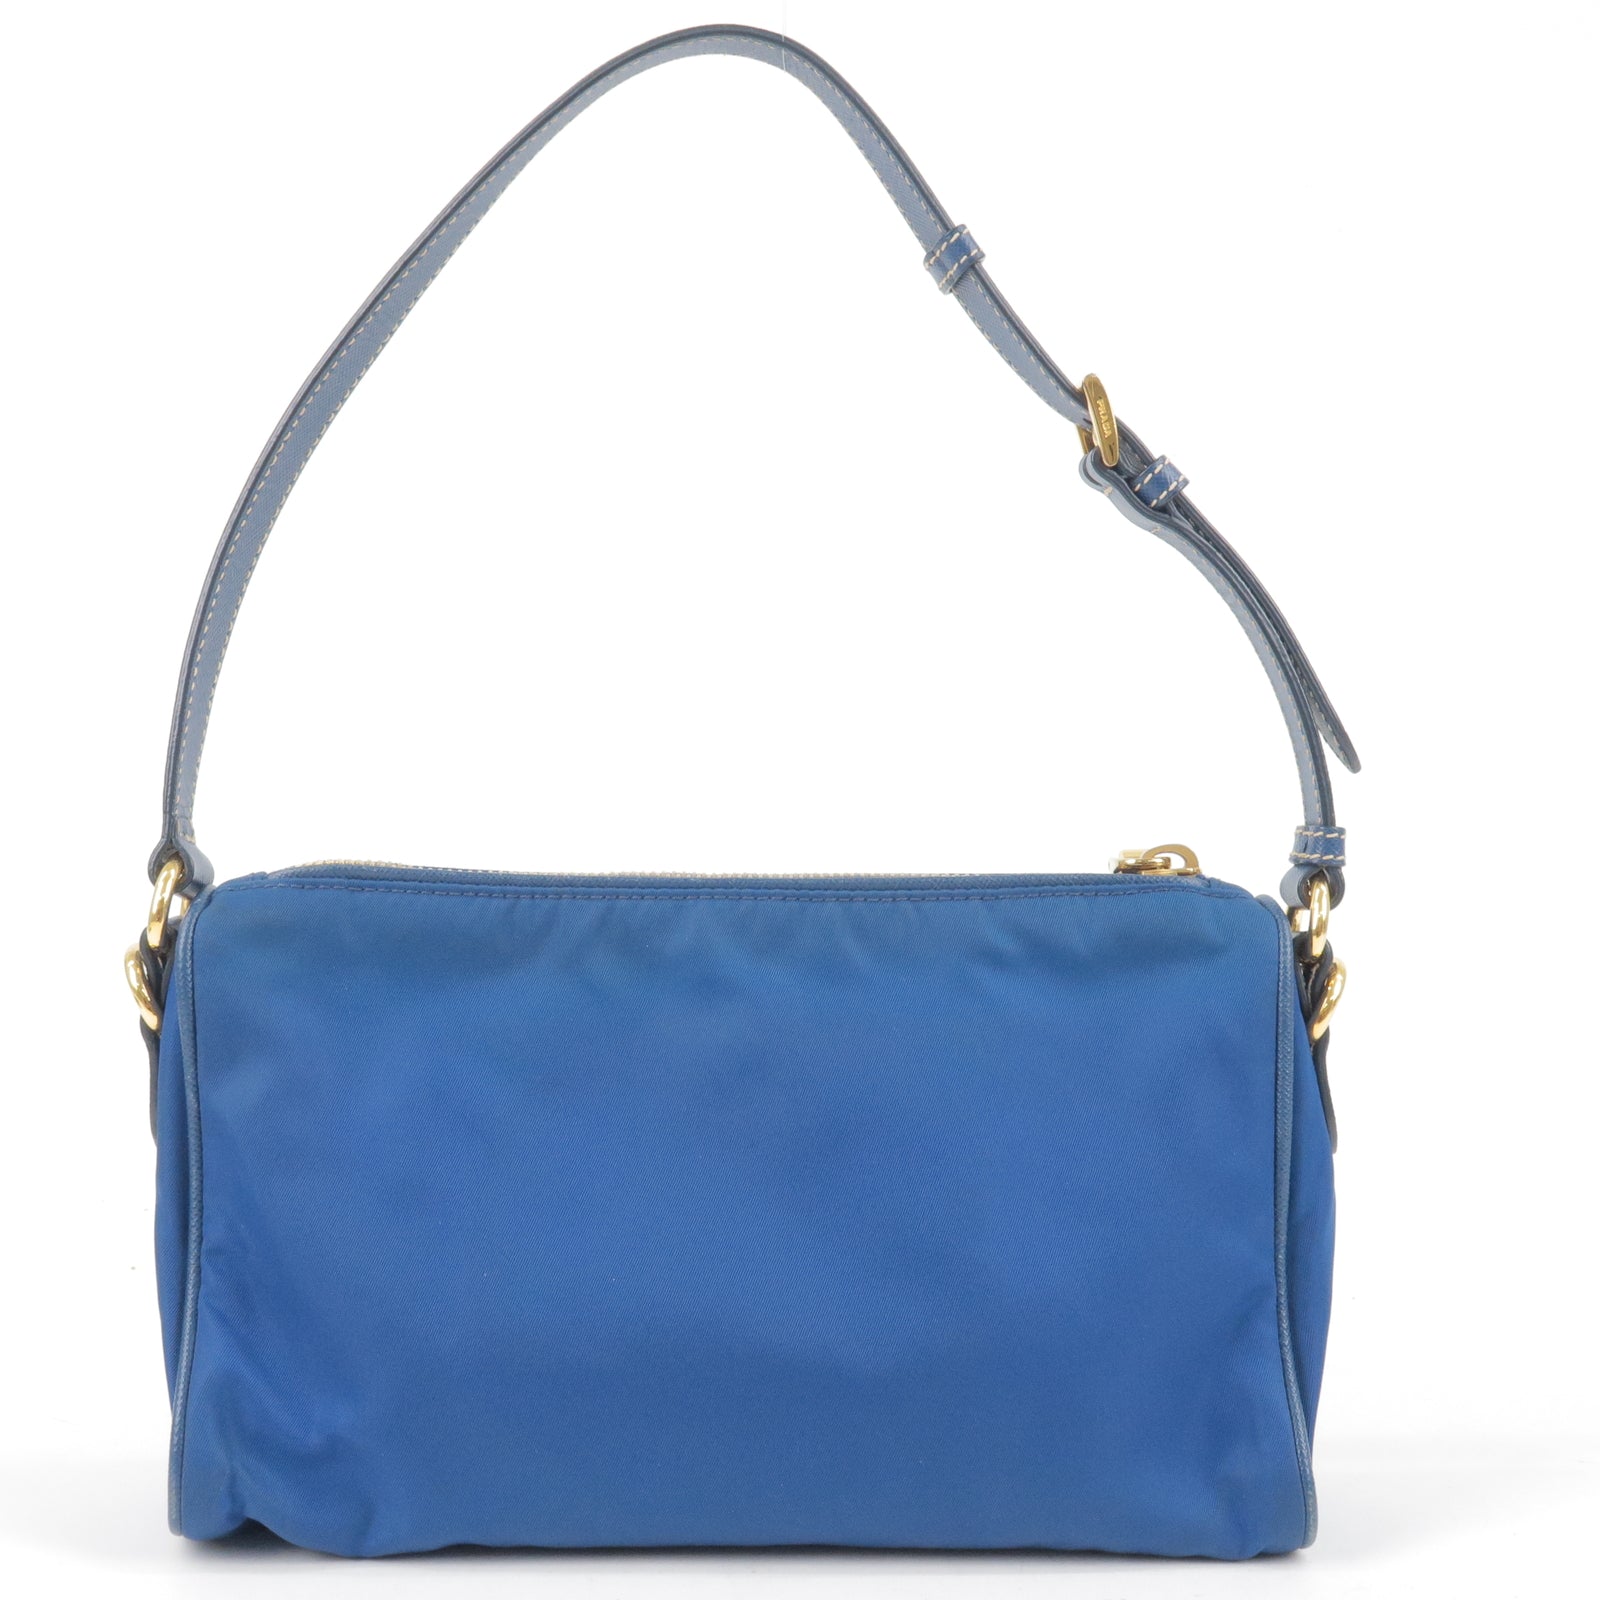 Pin by Aly Westwell on Wear | Bags, Handbags michael kors, Prada handbags